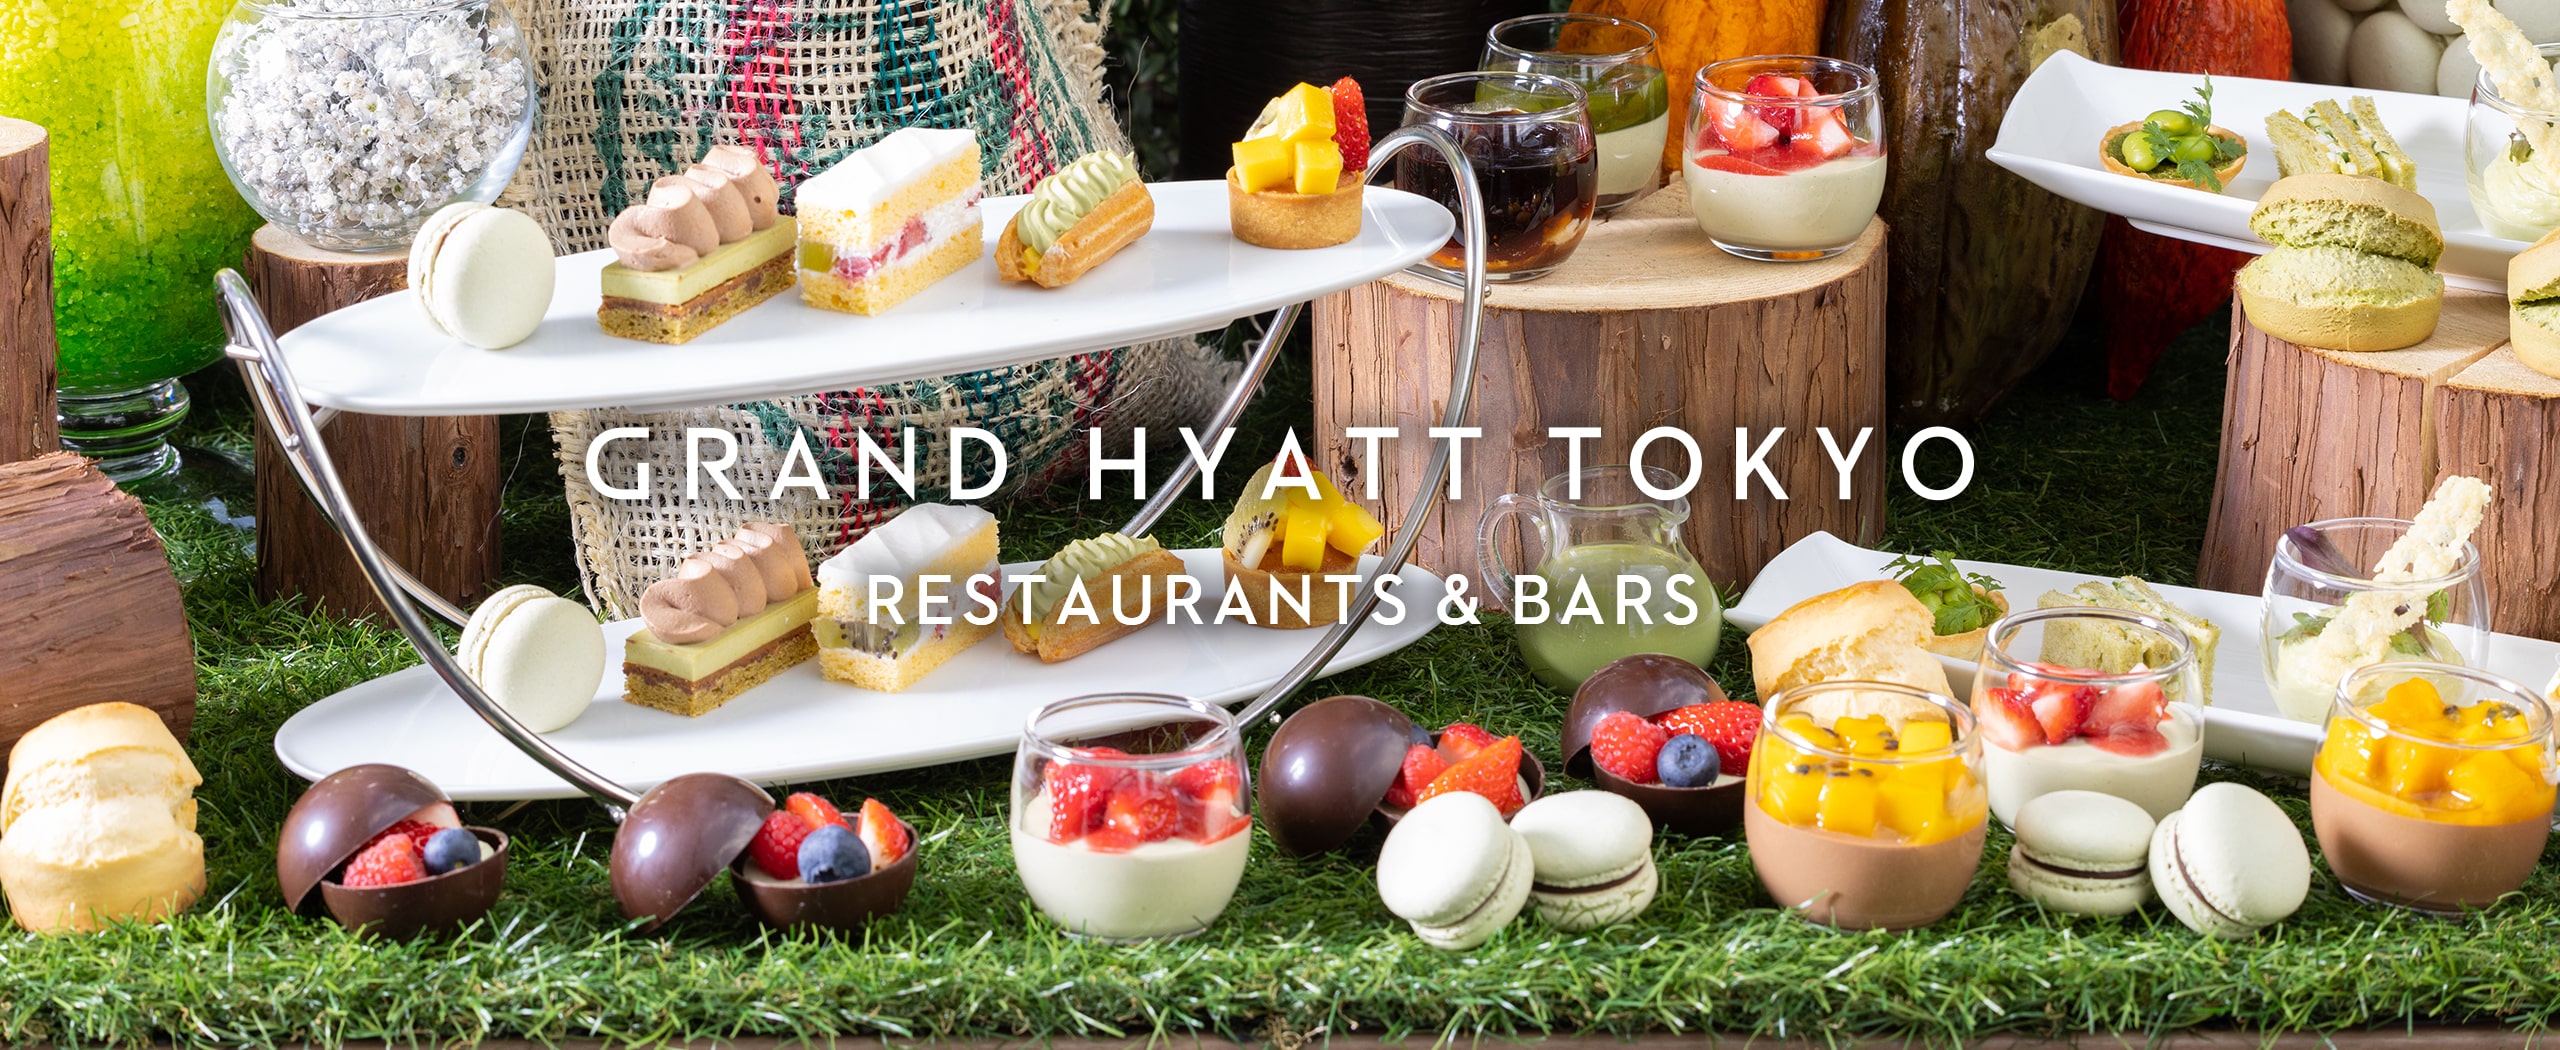 Restaurants at a luxurious Roppongi Hotel, Grand Hyatt Tokyo